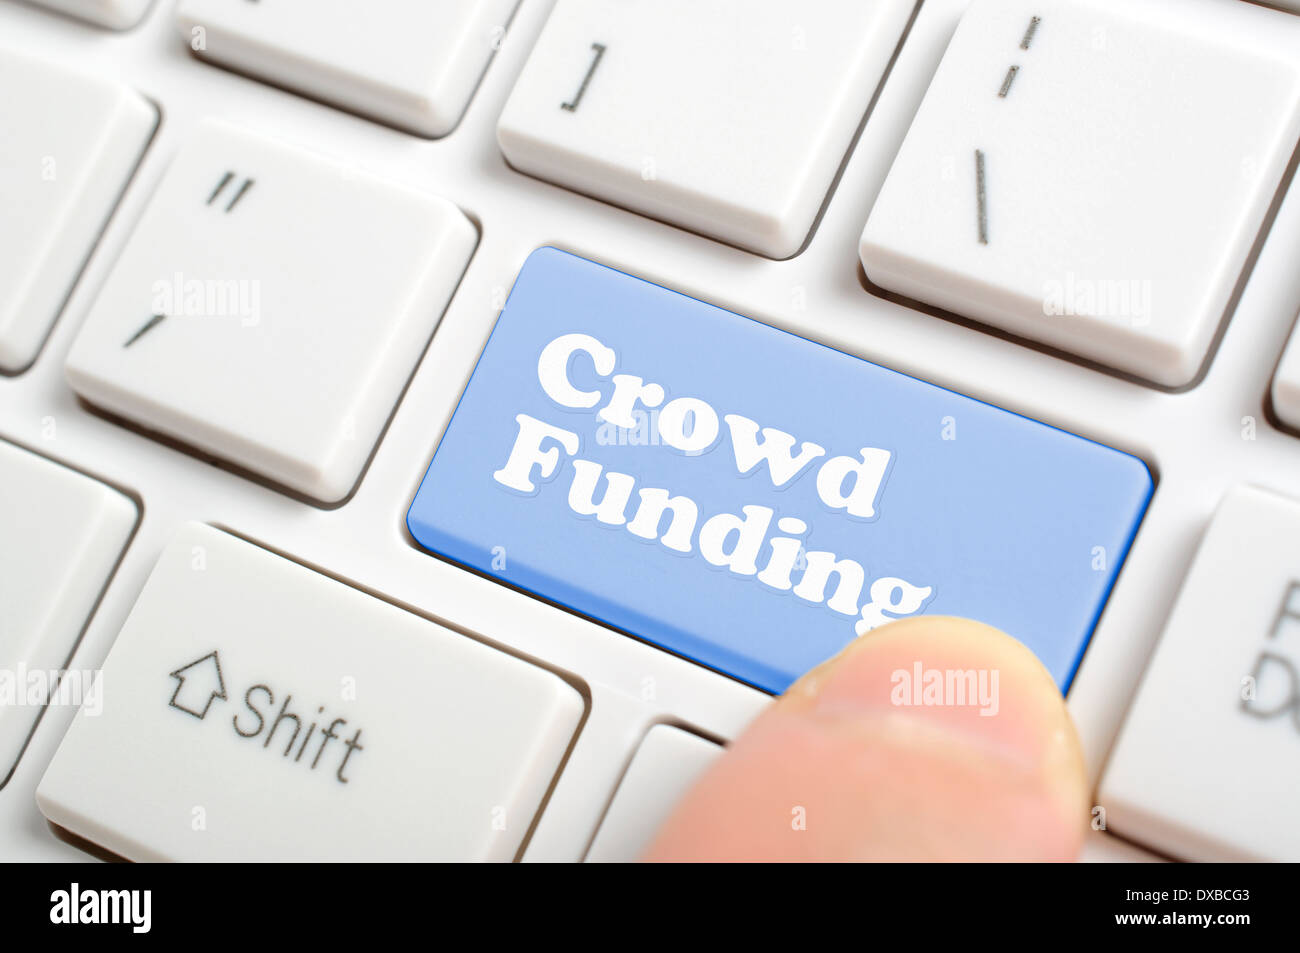 Pressing crowd funding key on keyboard Stock Photo